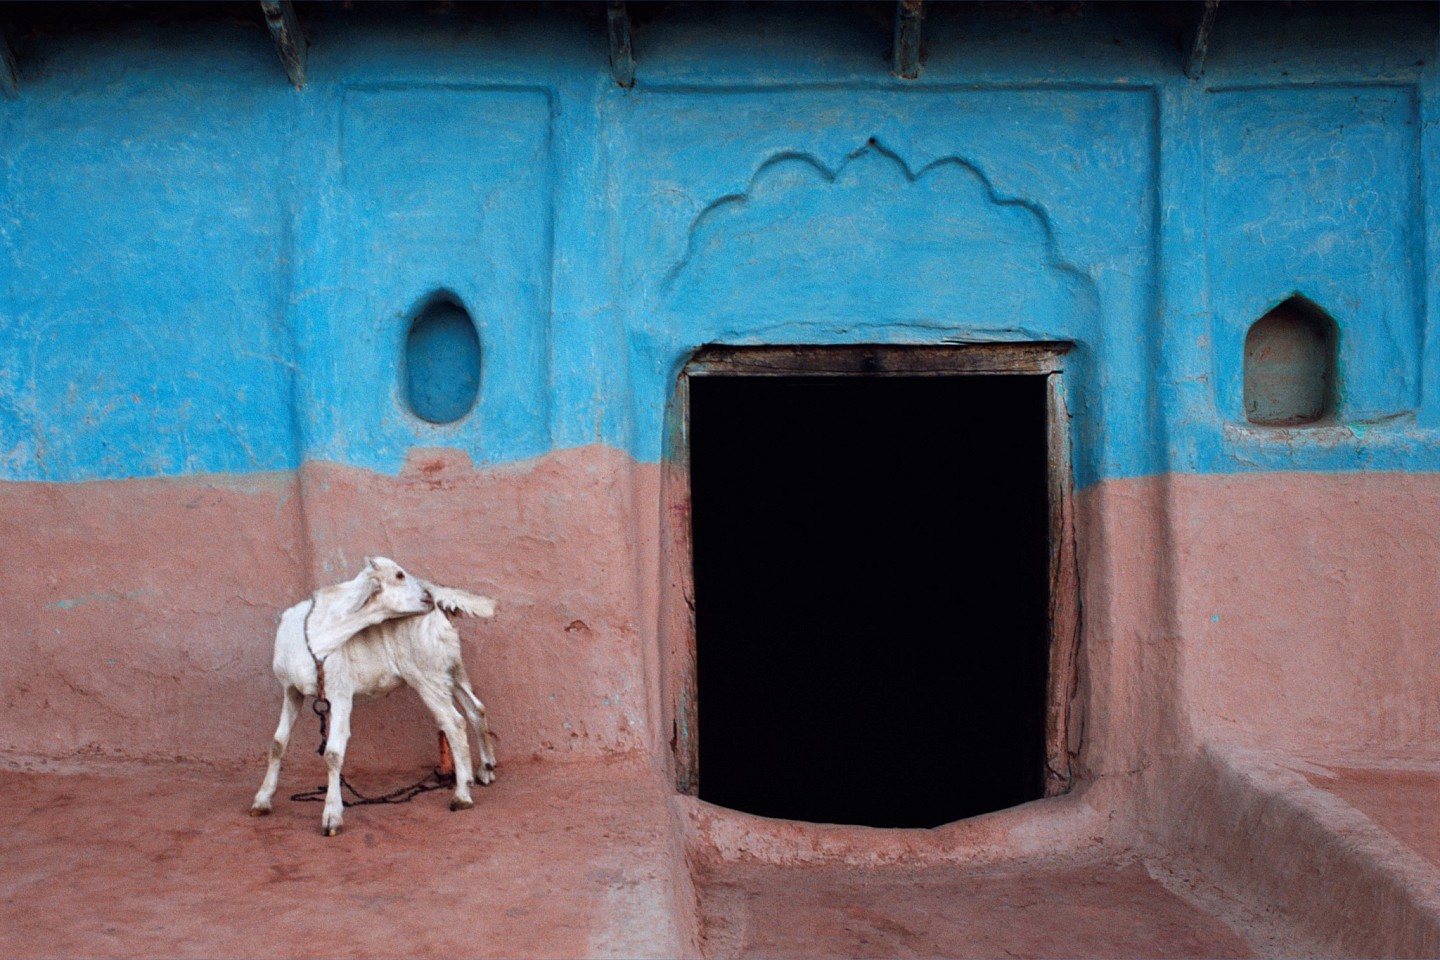 Jeffrey Becom, White Goat, Bangra, Uttar Pradesh, India
2008, Pigment inkjet print